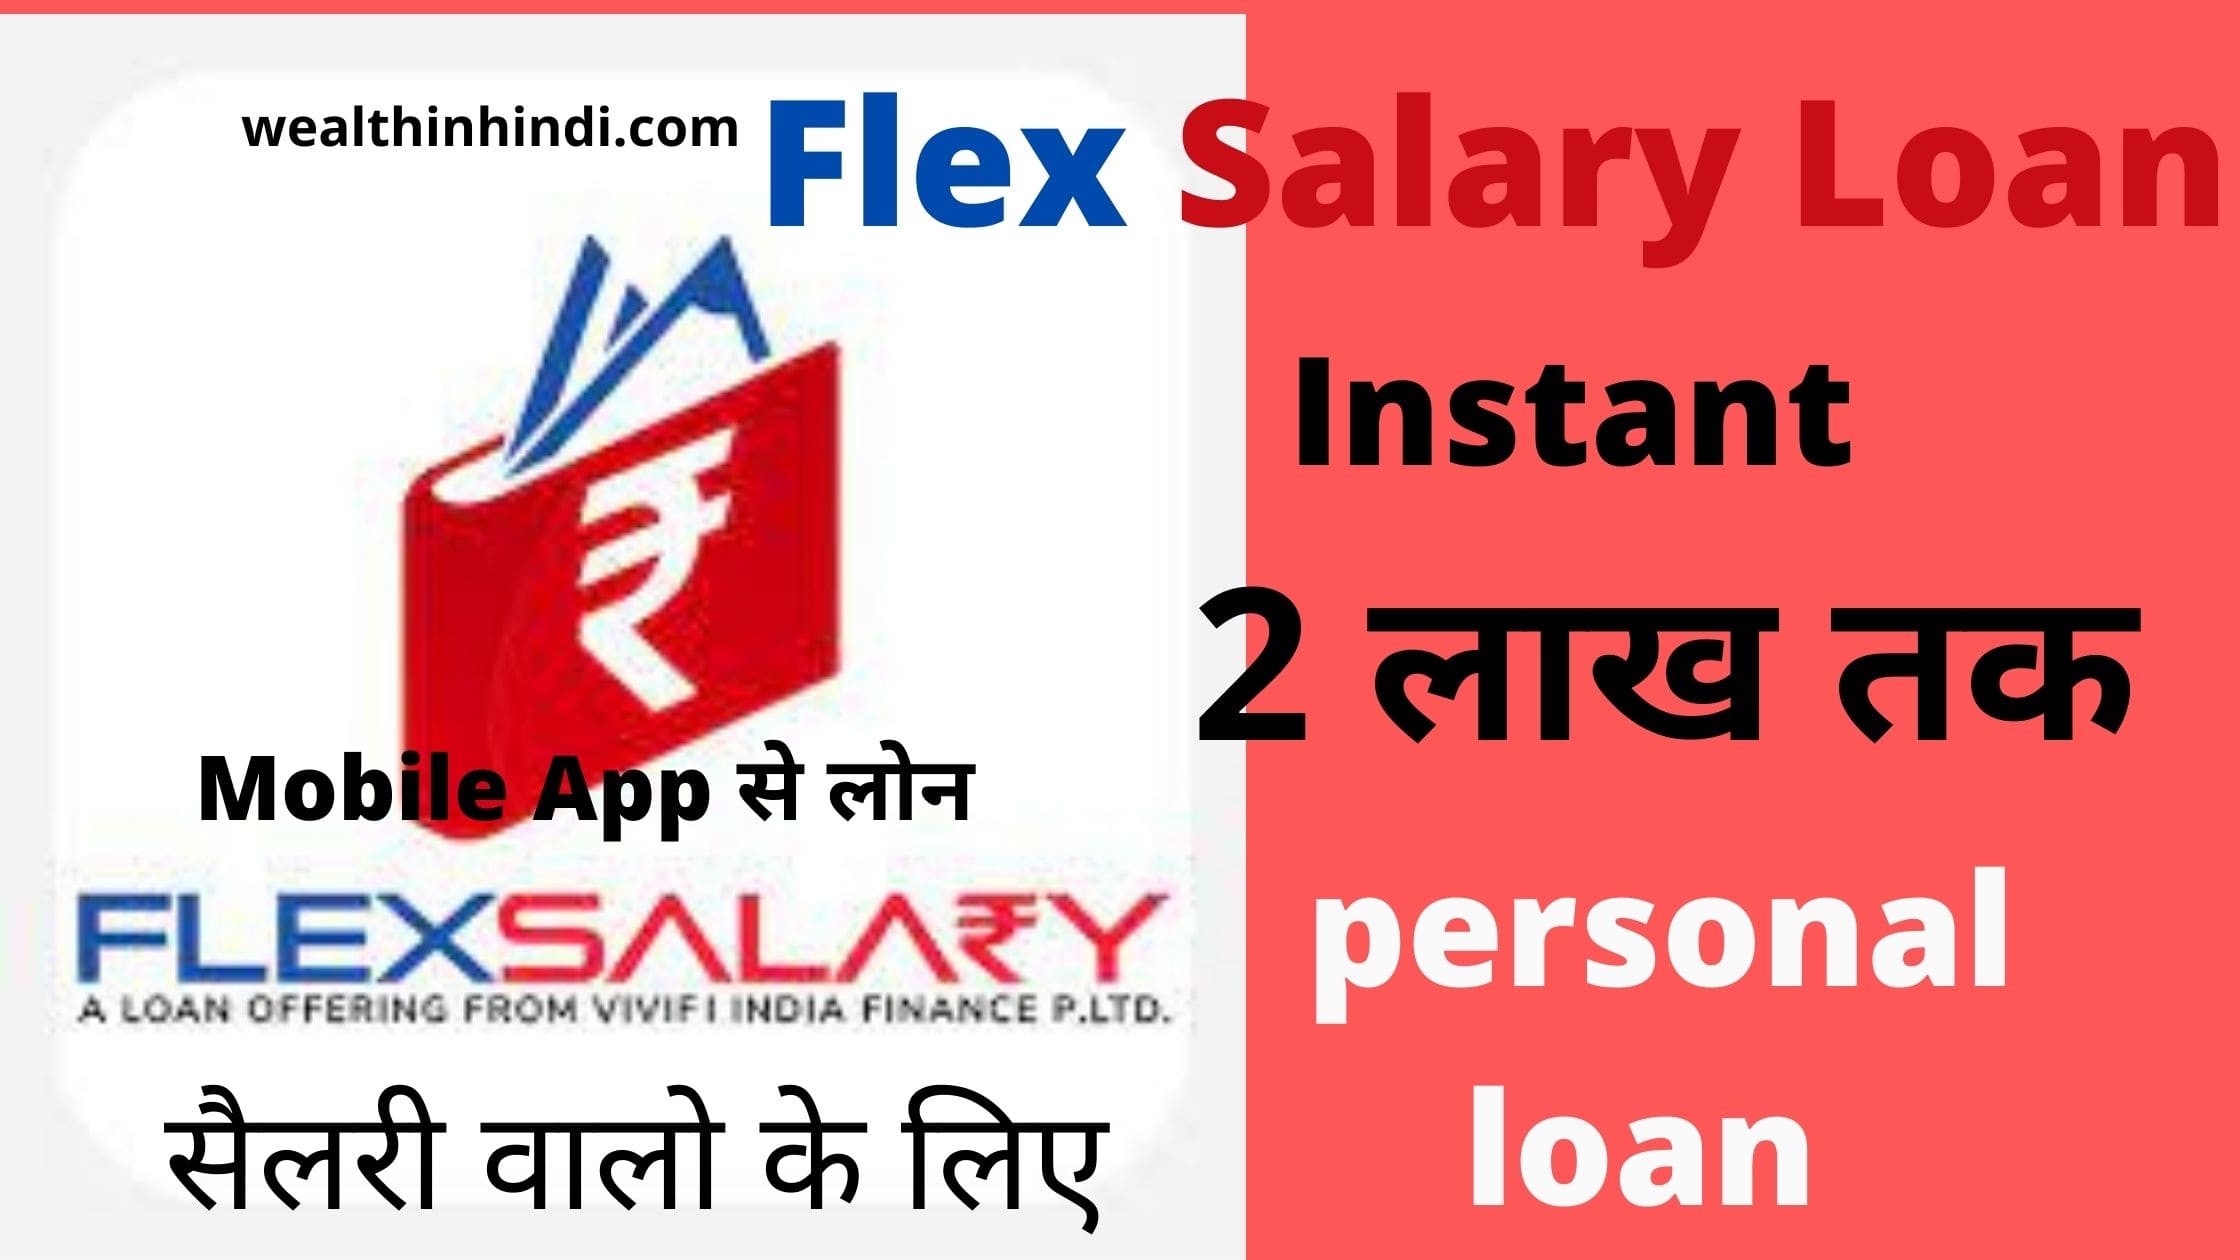 Flex salary loan